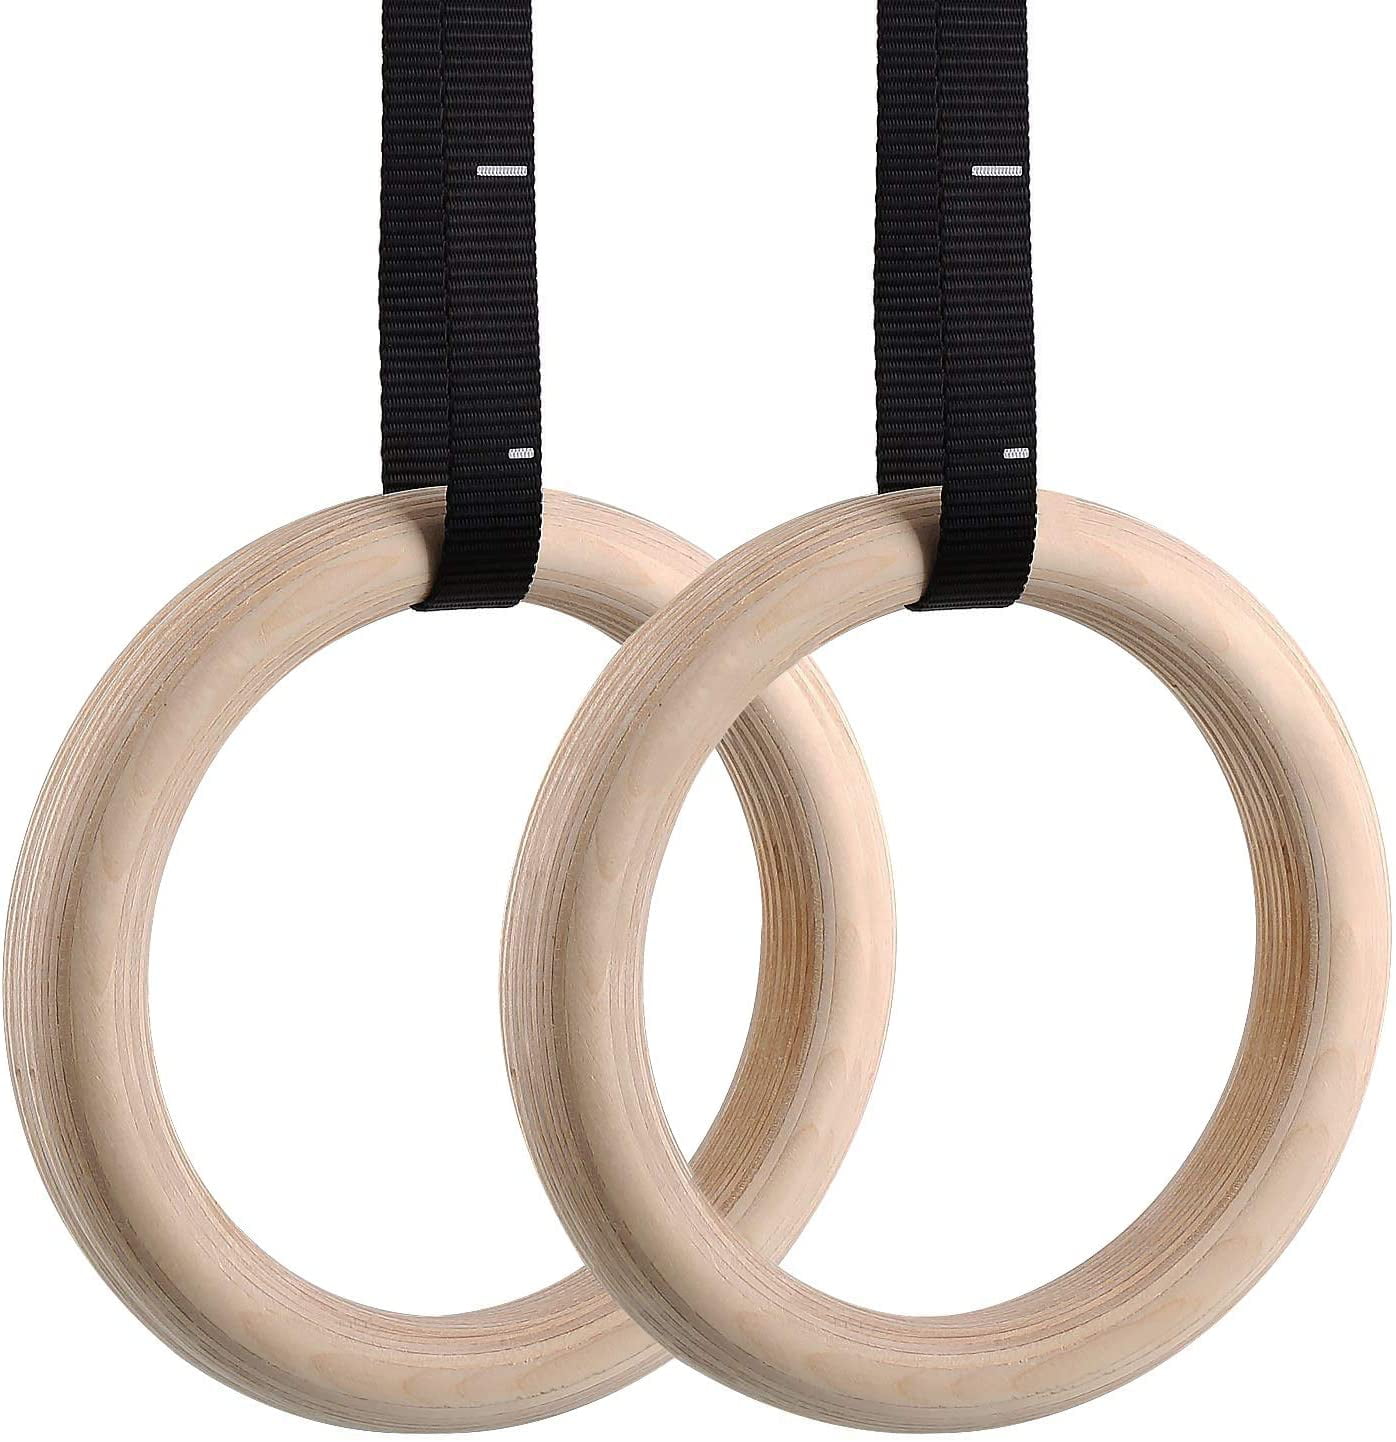 Premium Wooden Gymnastic Rings Set Exercise Crossfit Gym Strength Training Dip 